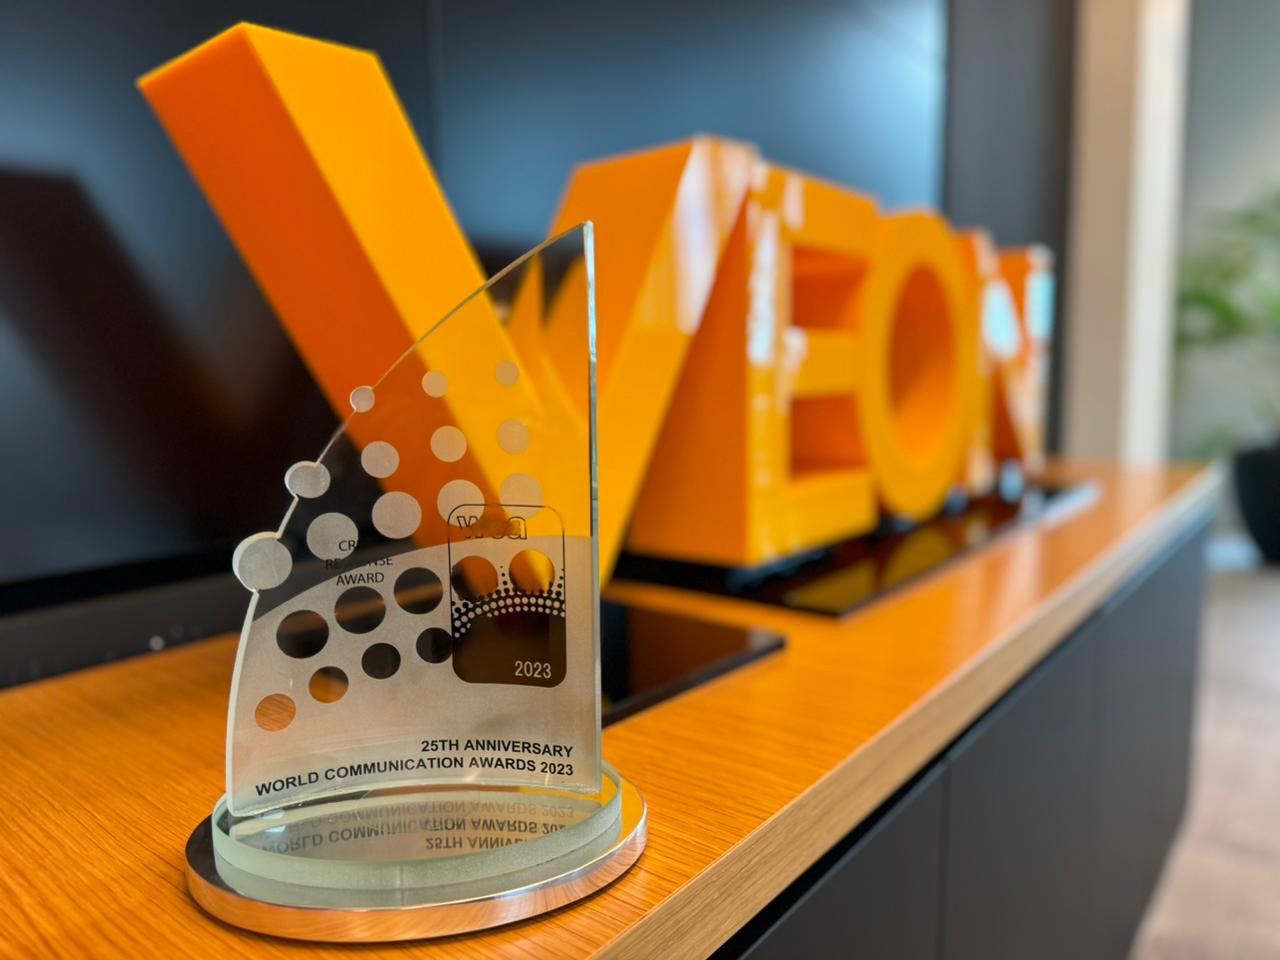 VEON نے ورلڈ کمیونیکیشن ایوارڈز 2023 میں کرائسز ریسپانس کے لیے ایوارڈ جیت لیا